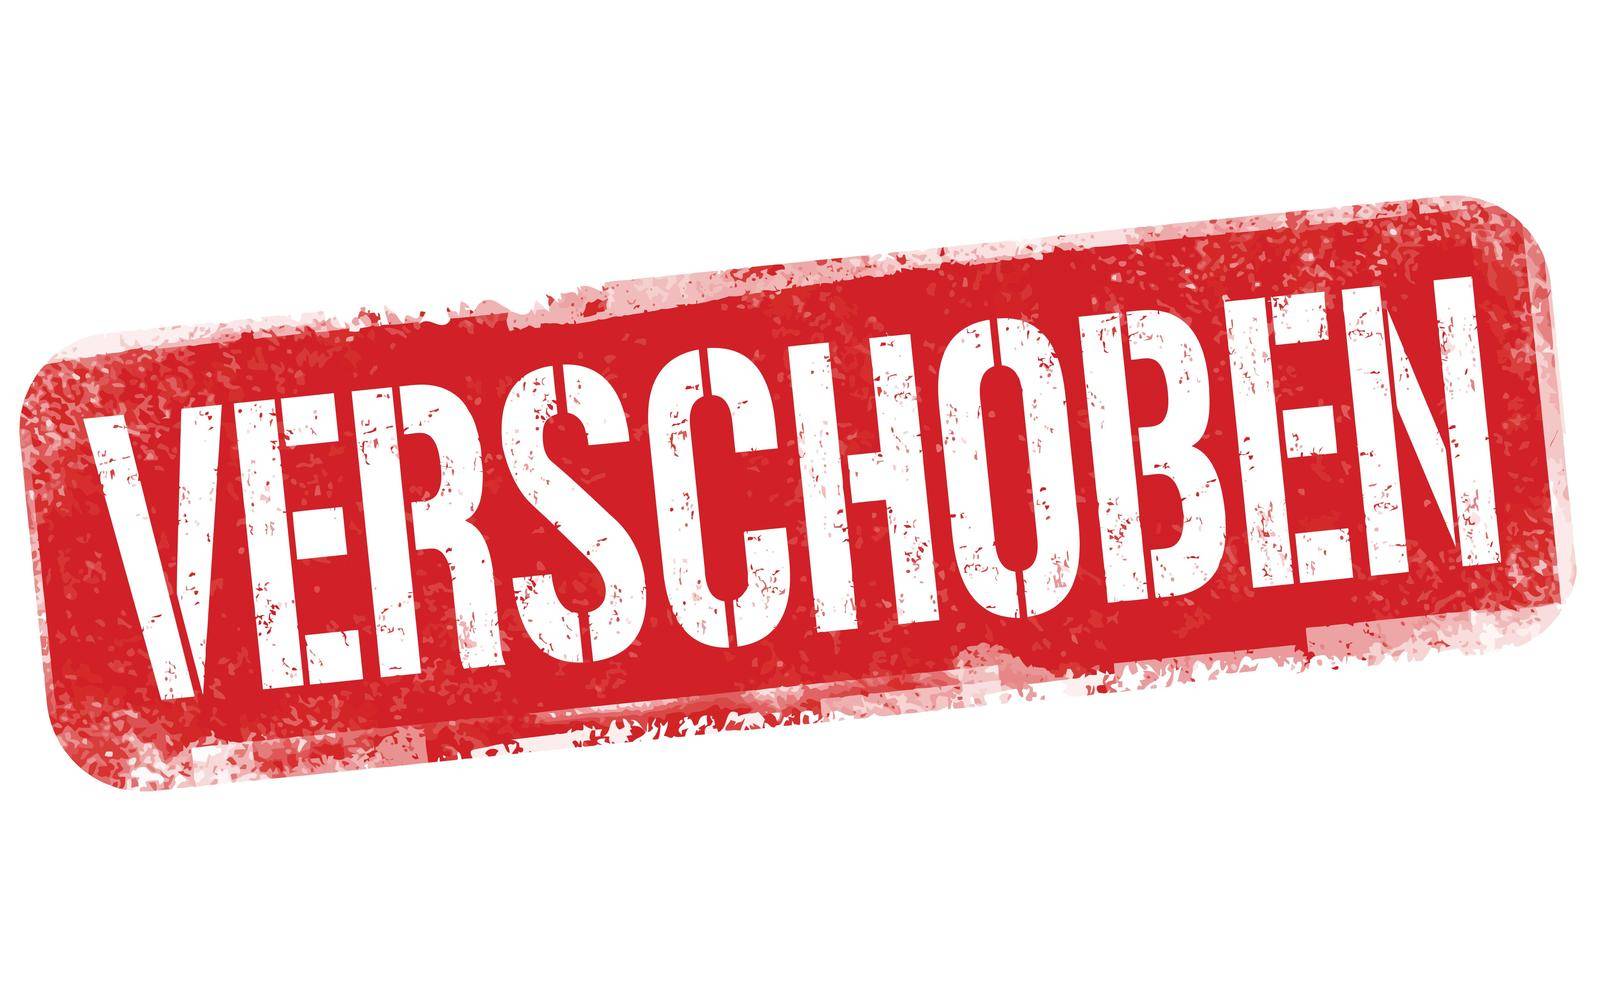 Postponed on german language ( Verschoben )grunge rubber stamp by roxanabalint